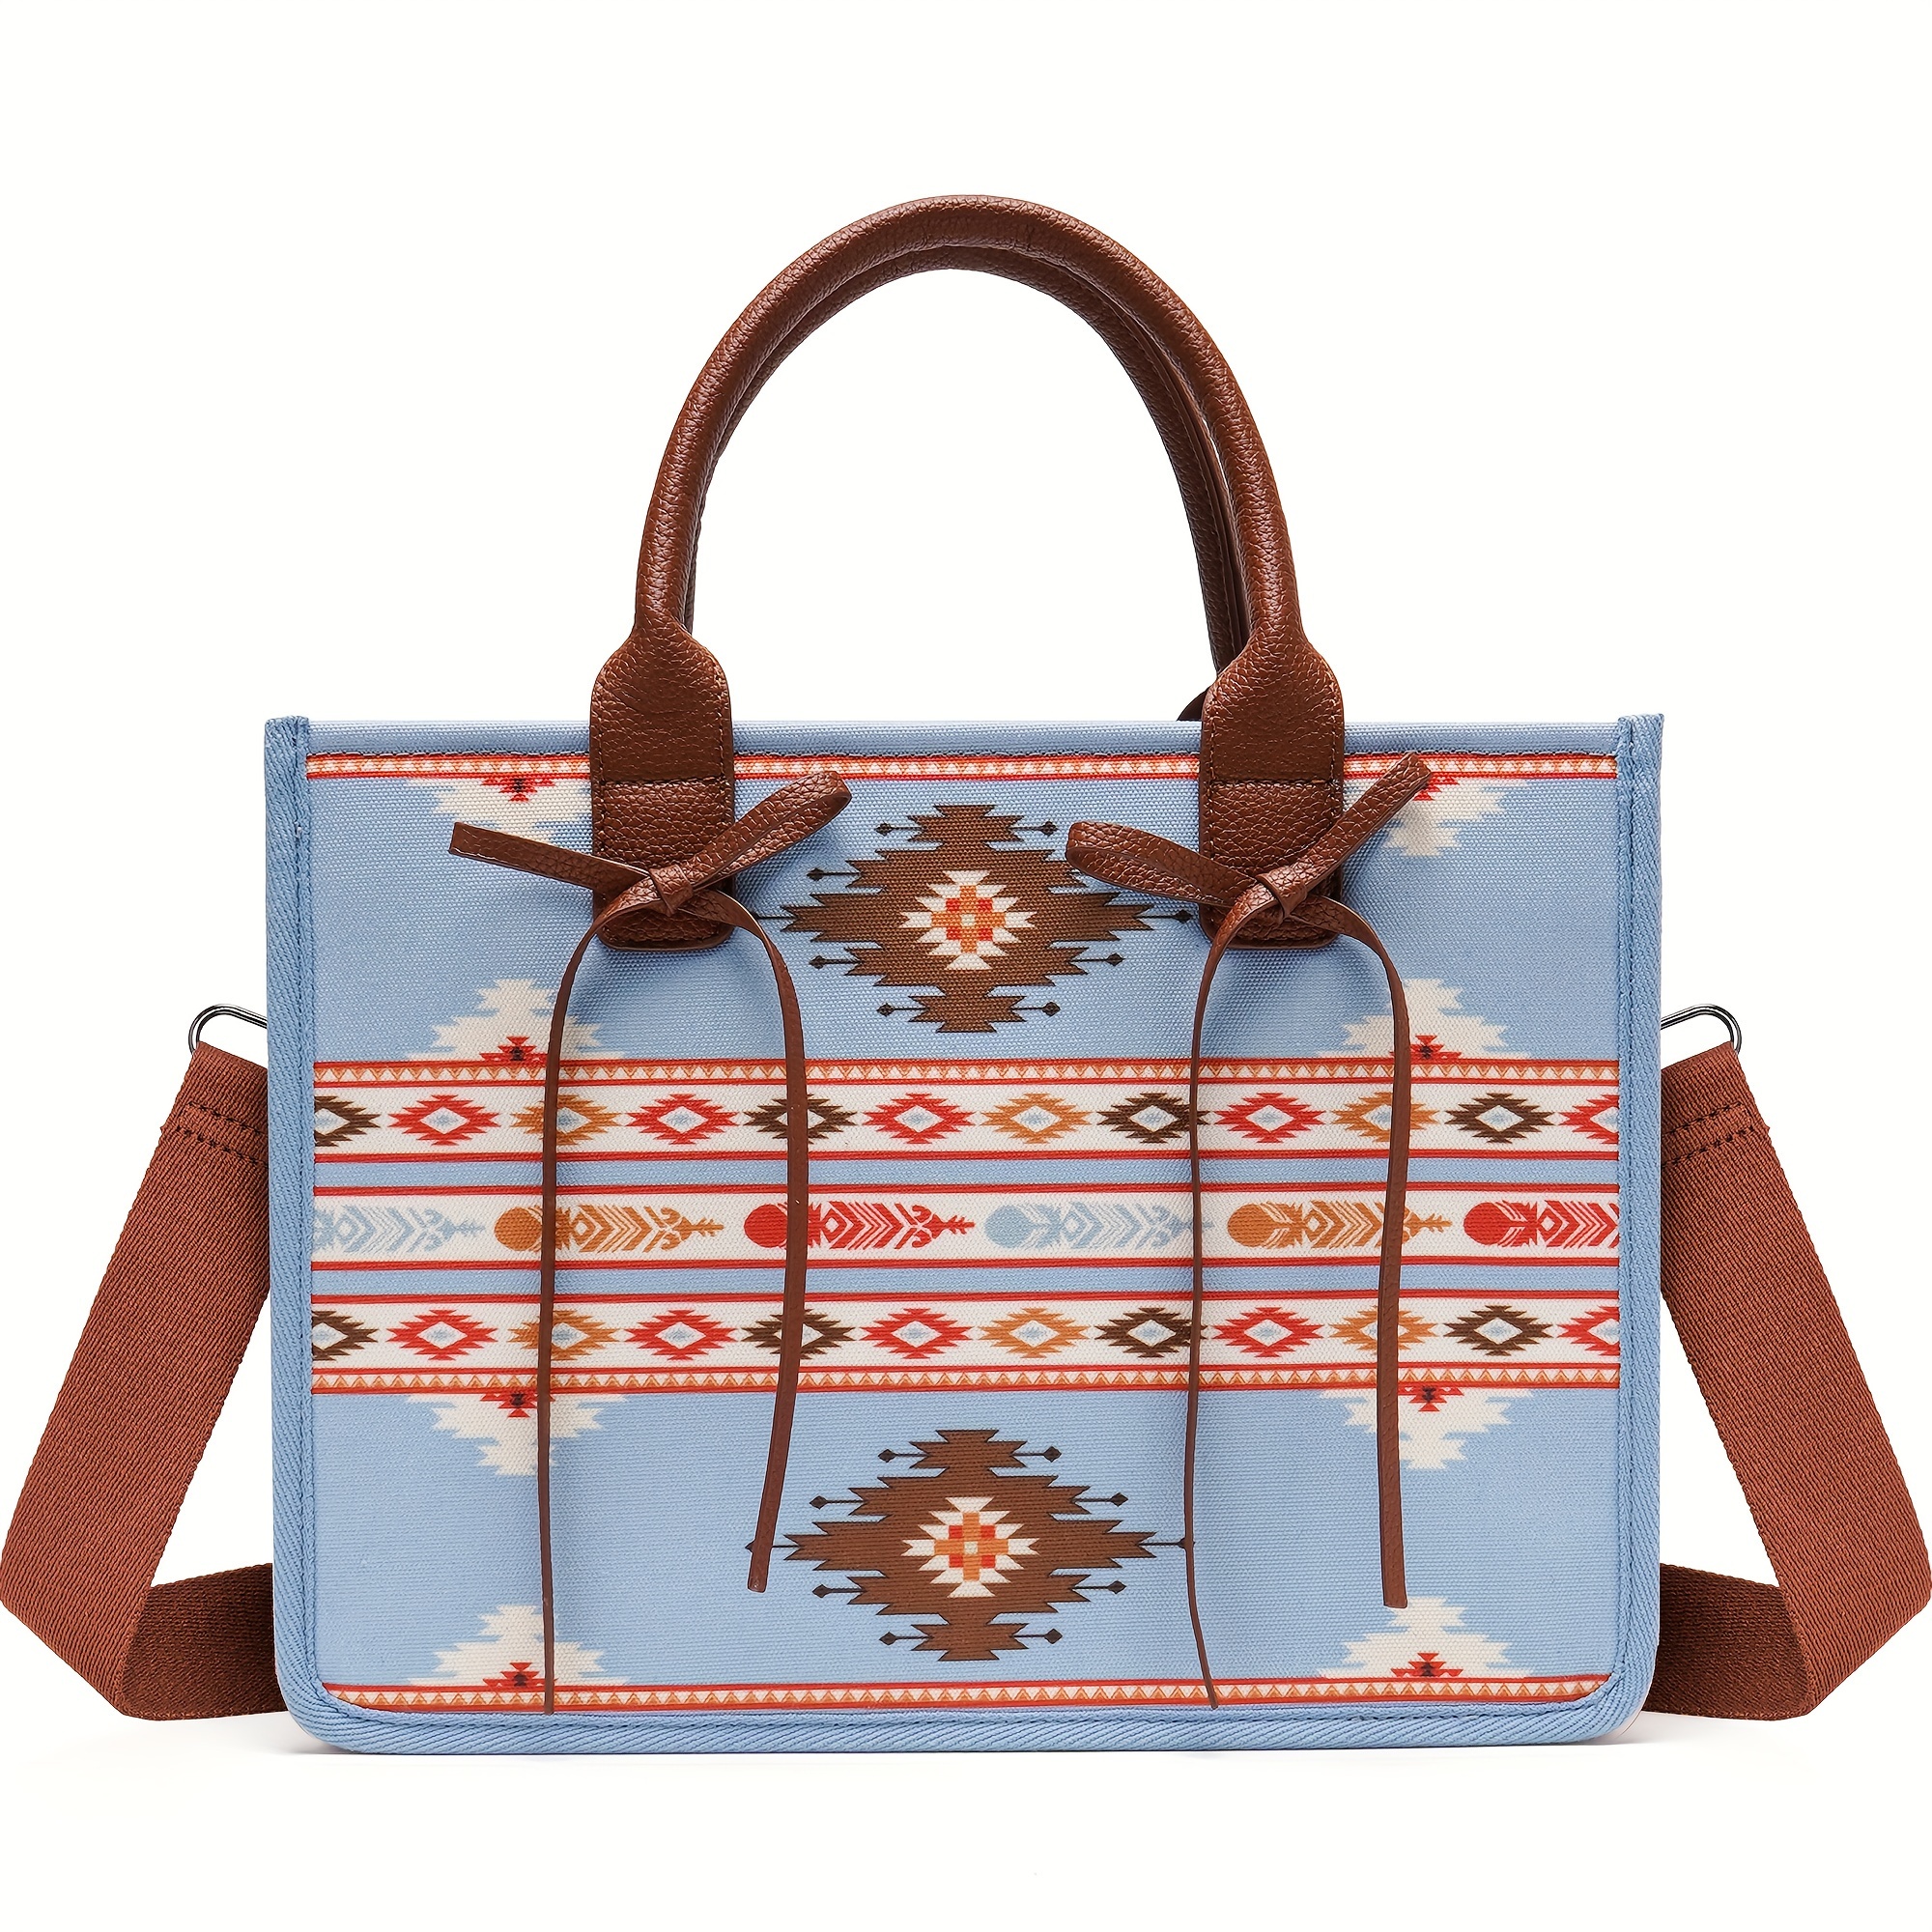 

Vintage Handbag Western Style Purse Ladies Tote Bag Shoulder Bag Bohemian Crossbody Bag